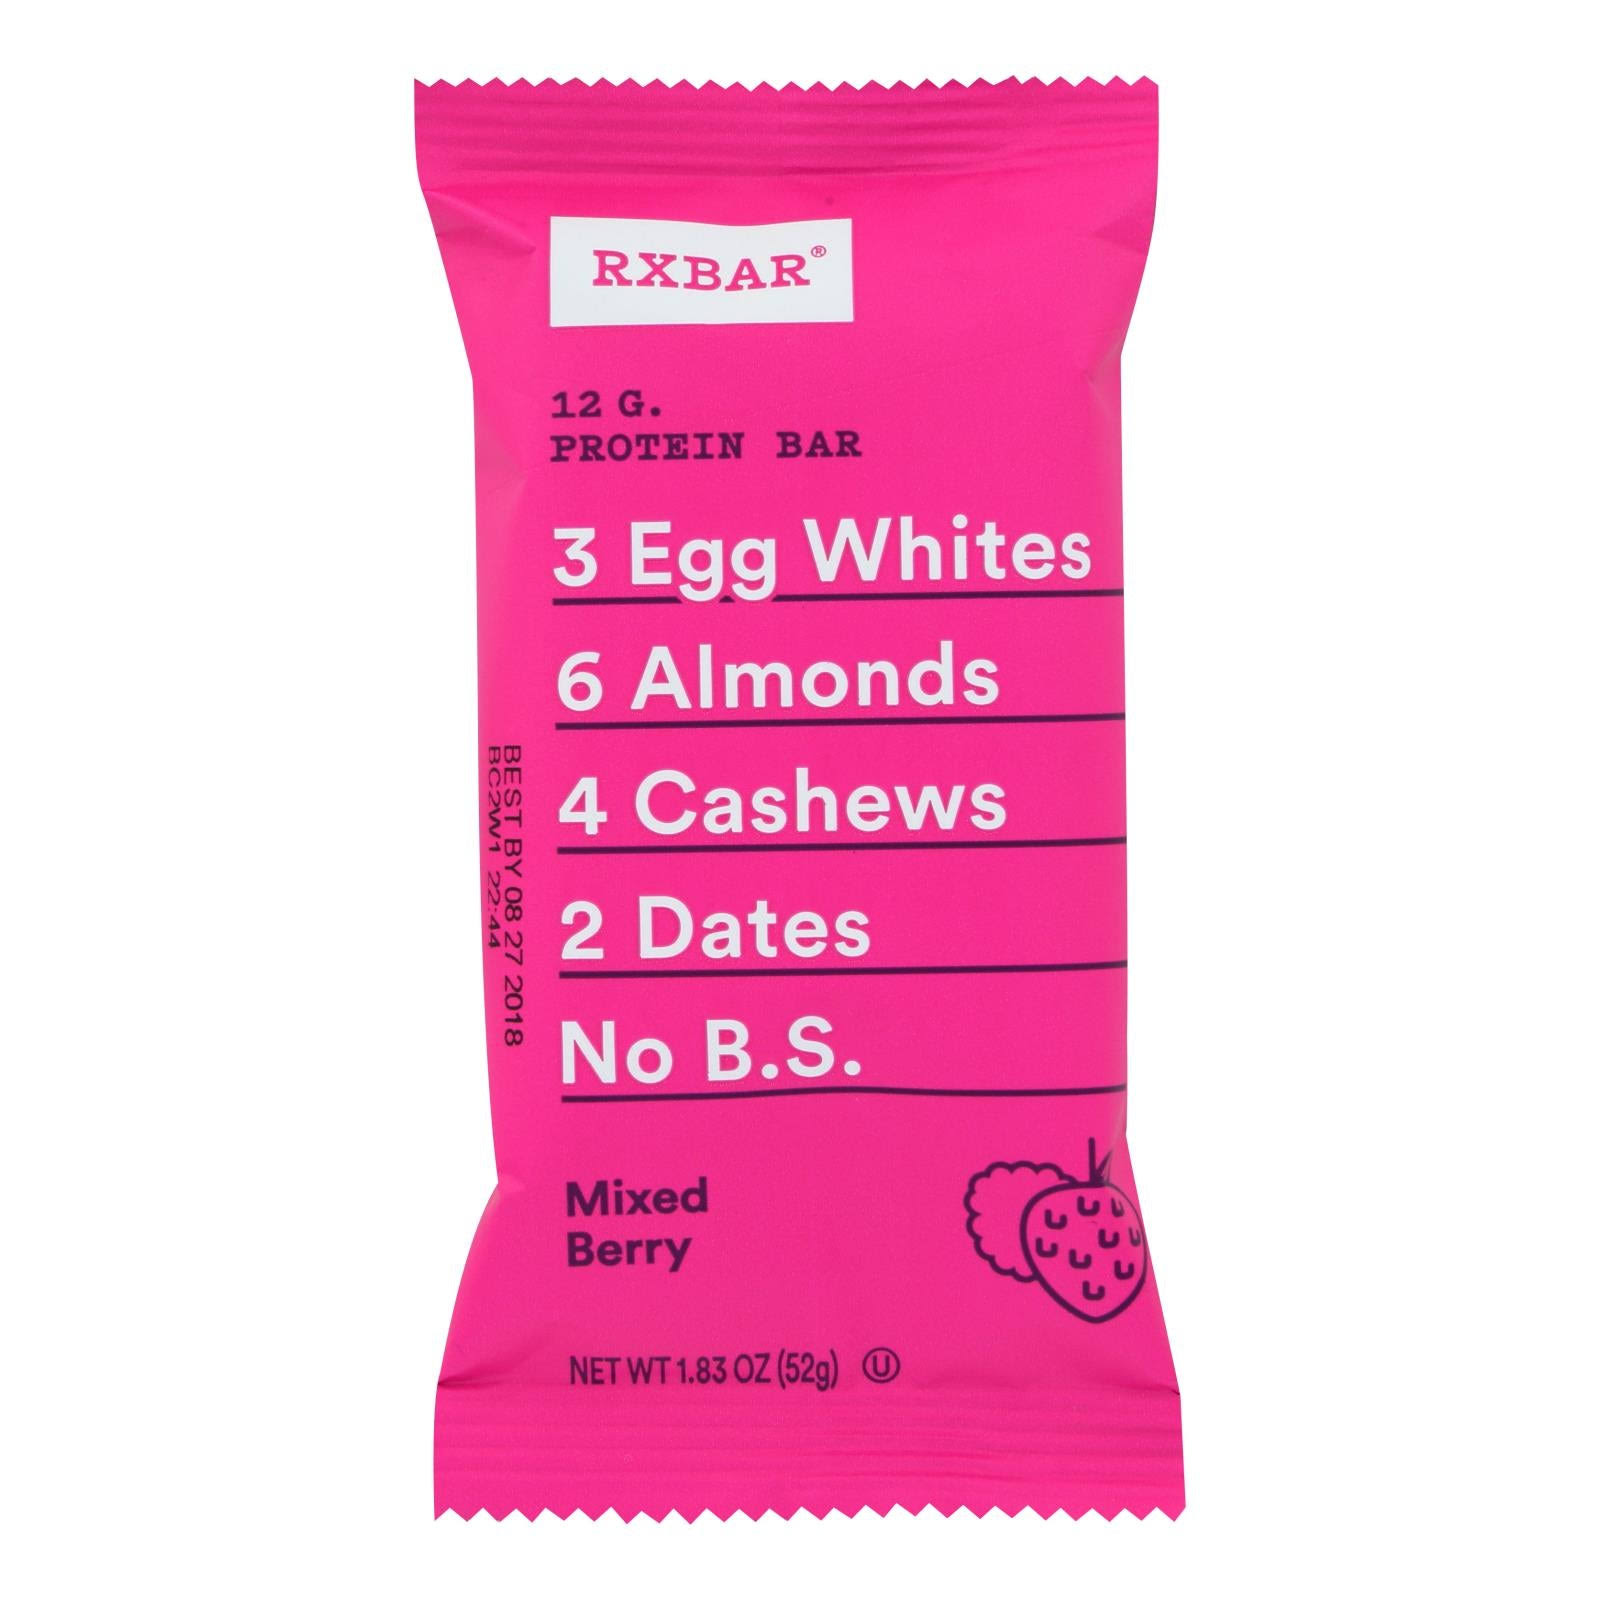 RXBAR Protein Bar Mixed Berry 1.83 oz.